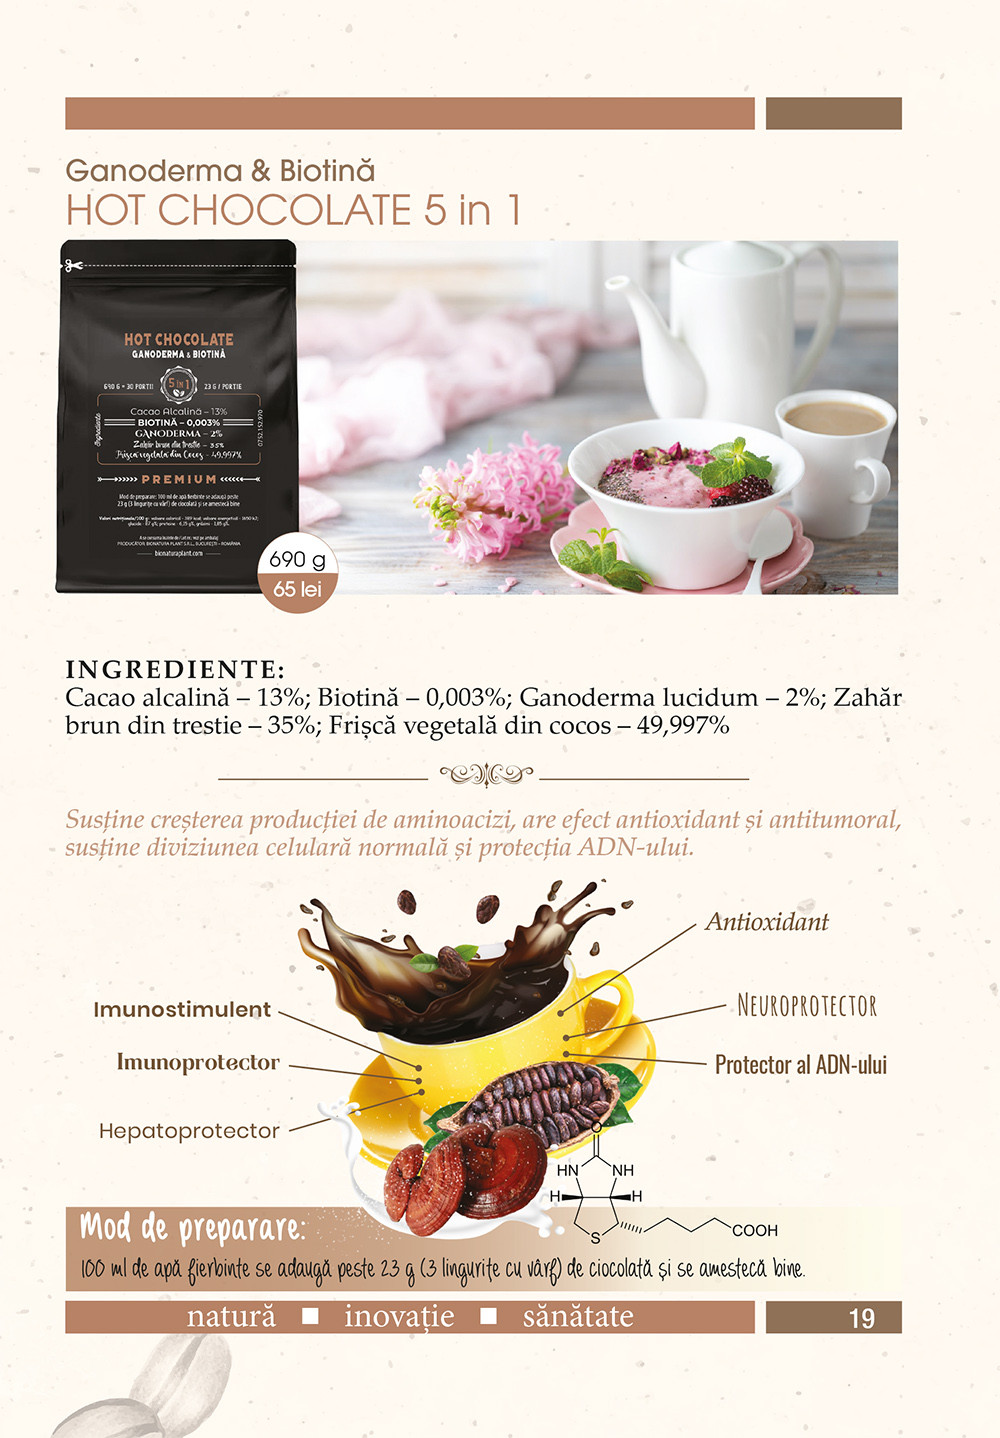 Hot Chocolate 5in1 cu Ganoderma+Biotina - 690g - veg (30 de portii)